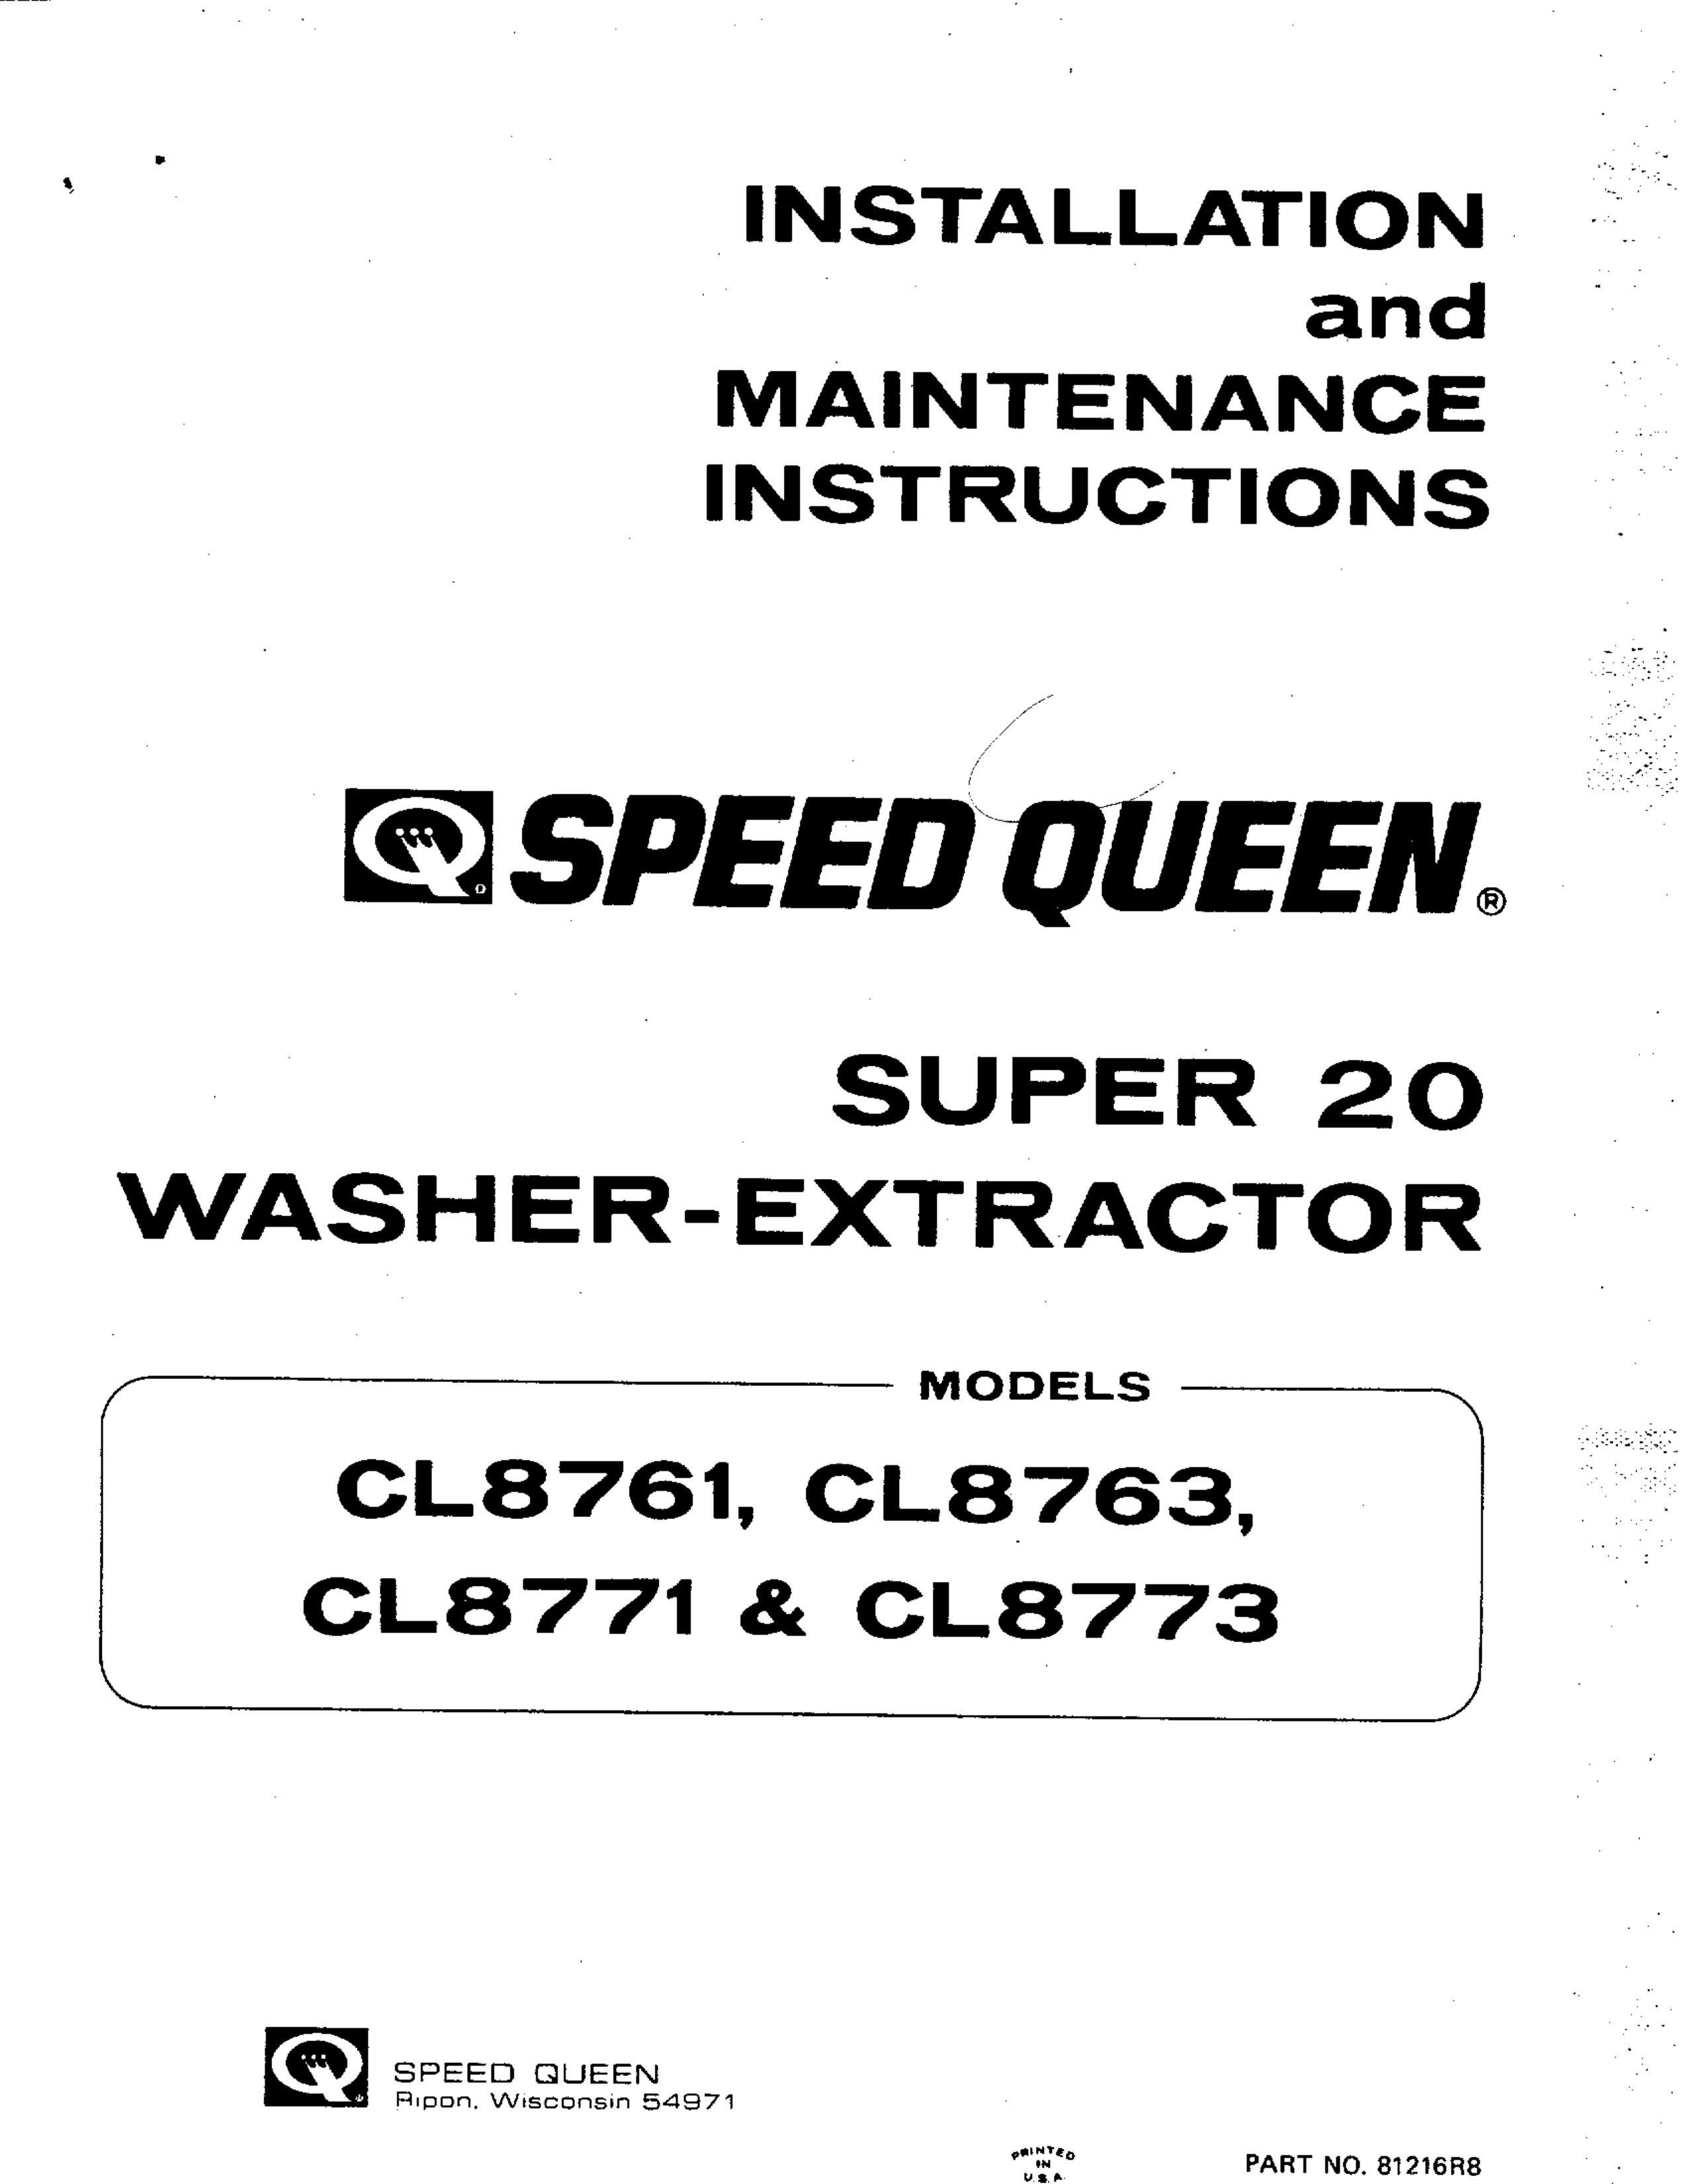 Speed Queen CL8773 Washer/Dryer User Manual